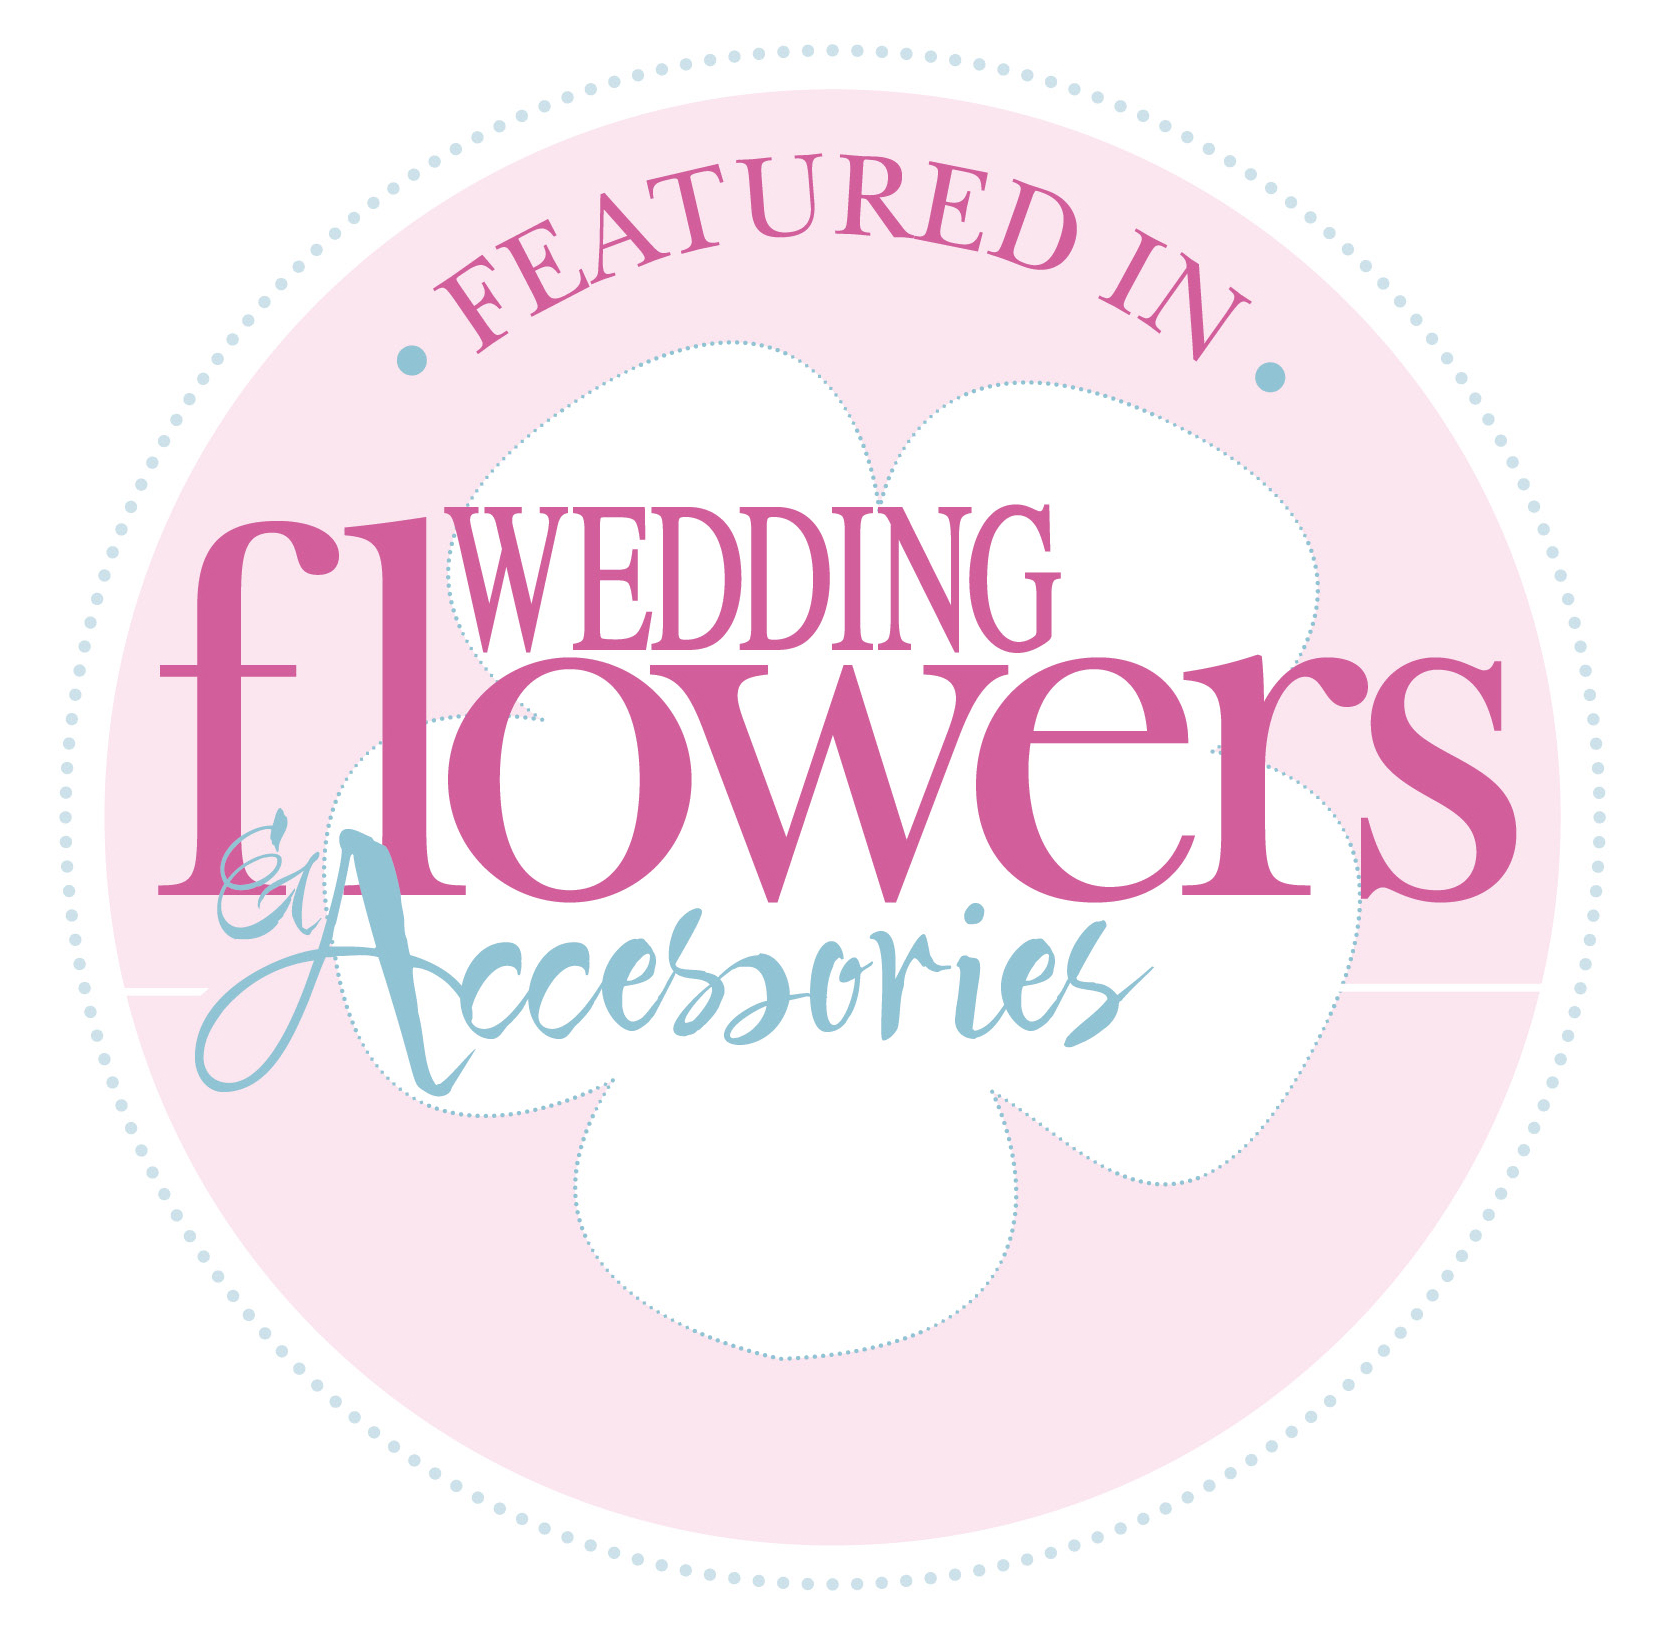 Featured-in-wedding flowers accessories.jpg